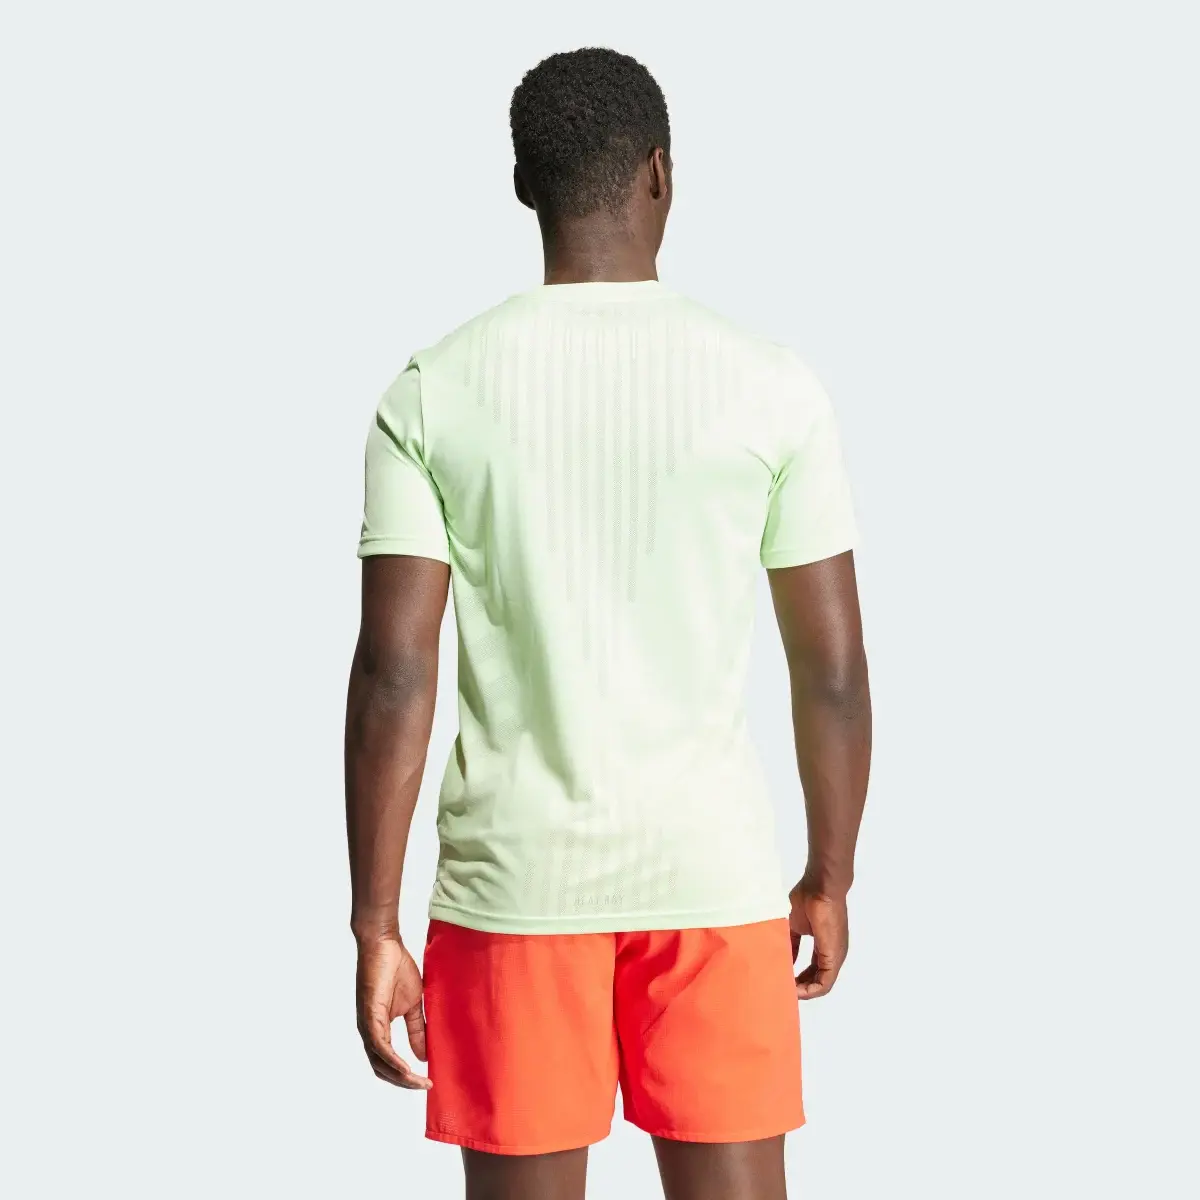 Adidas HIIT Airchill Workout T-Shirt. 3